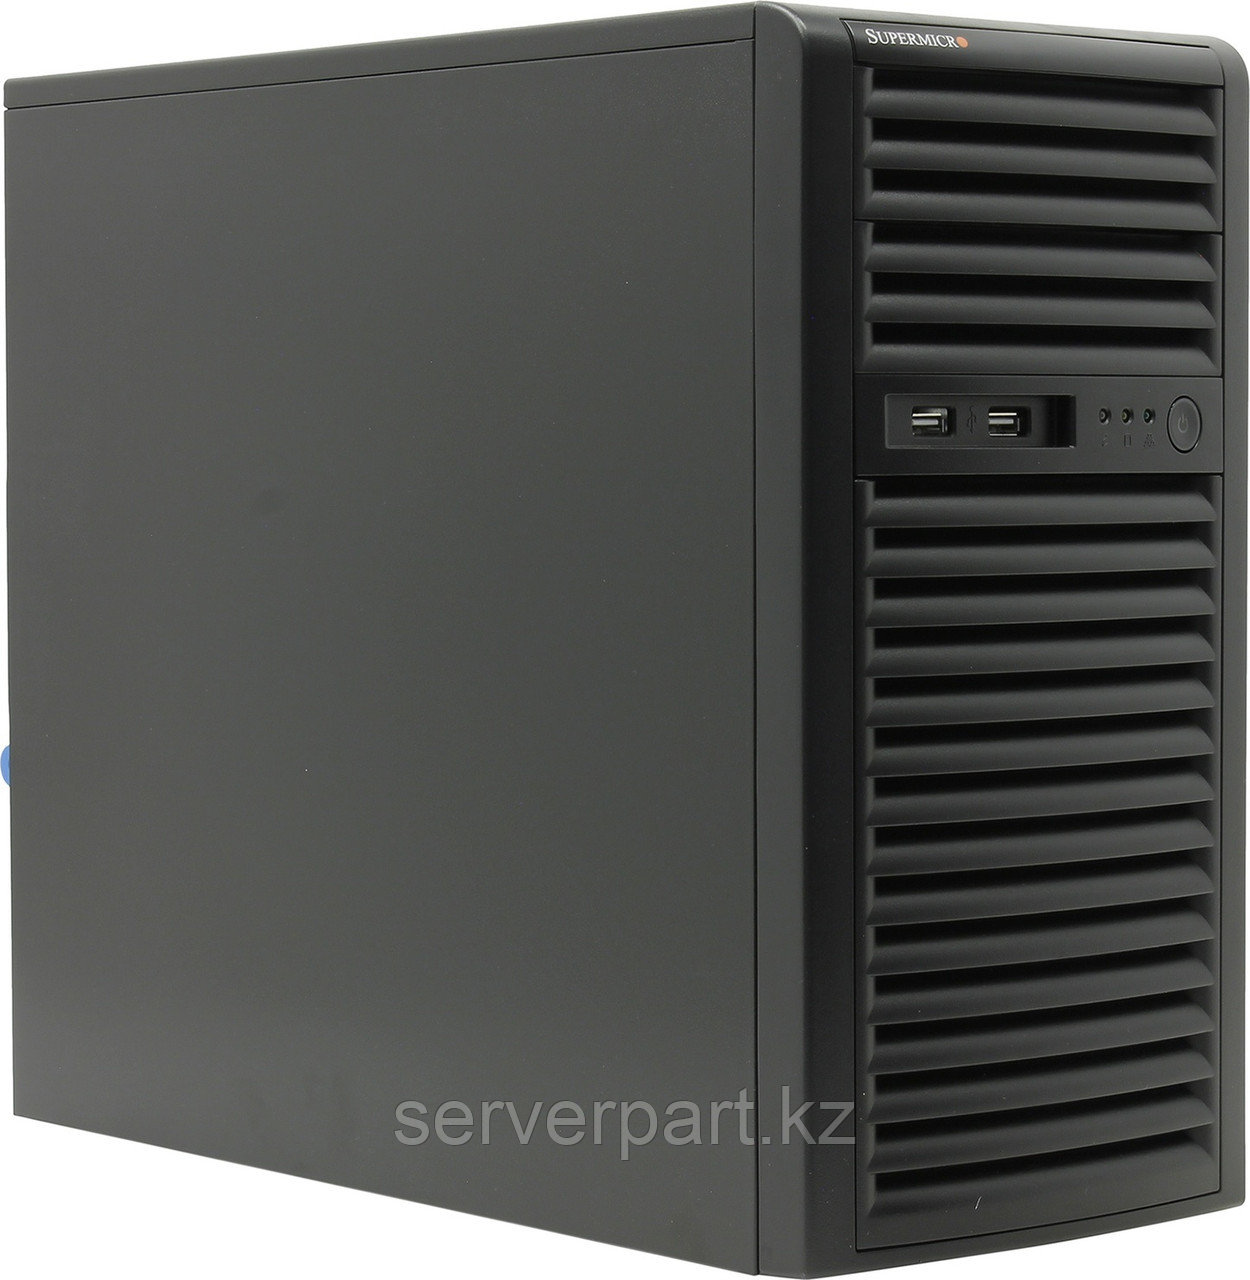 Сервер Supermicro 5039C Tower 4LFF/6-core intel xeon E-2136 3.3GHz/no RAM/no HDD nhp/RAID, фото 1